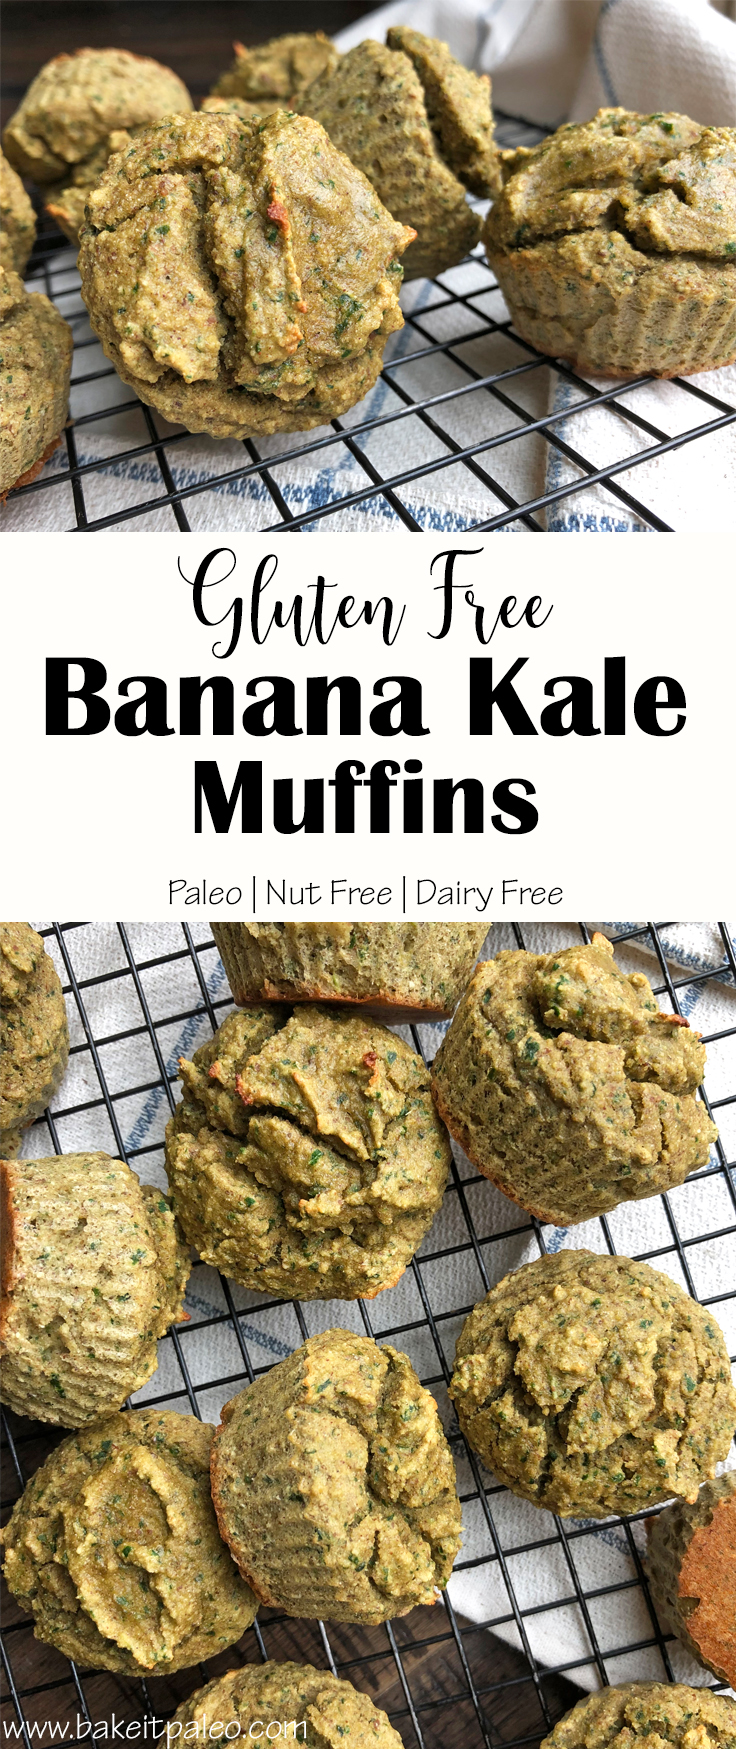 Gluten Free Paleo Banana Kale Muffins.jpg